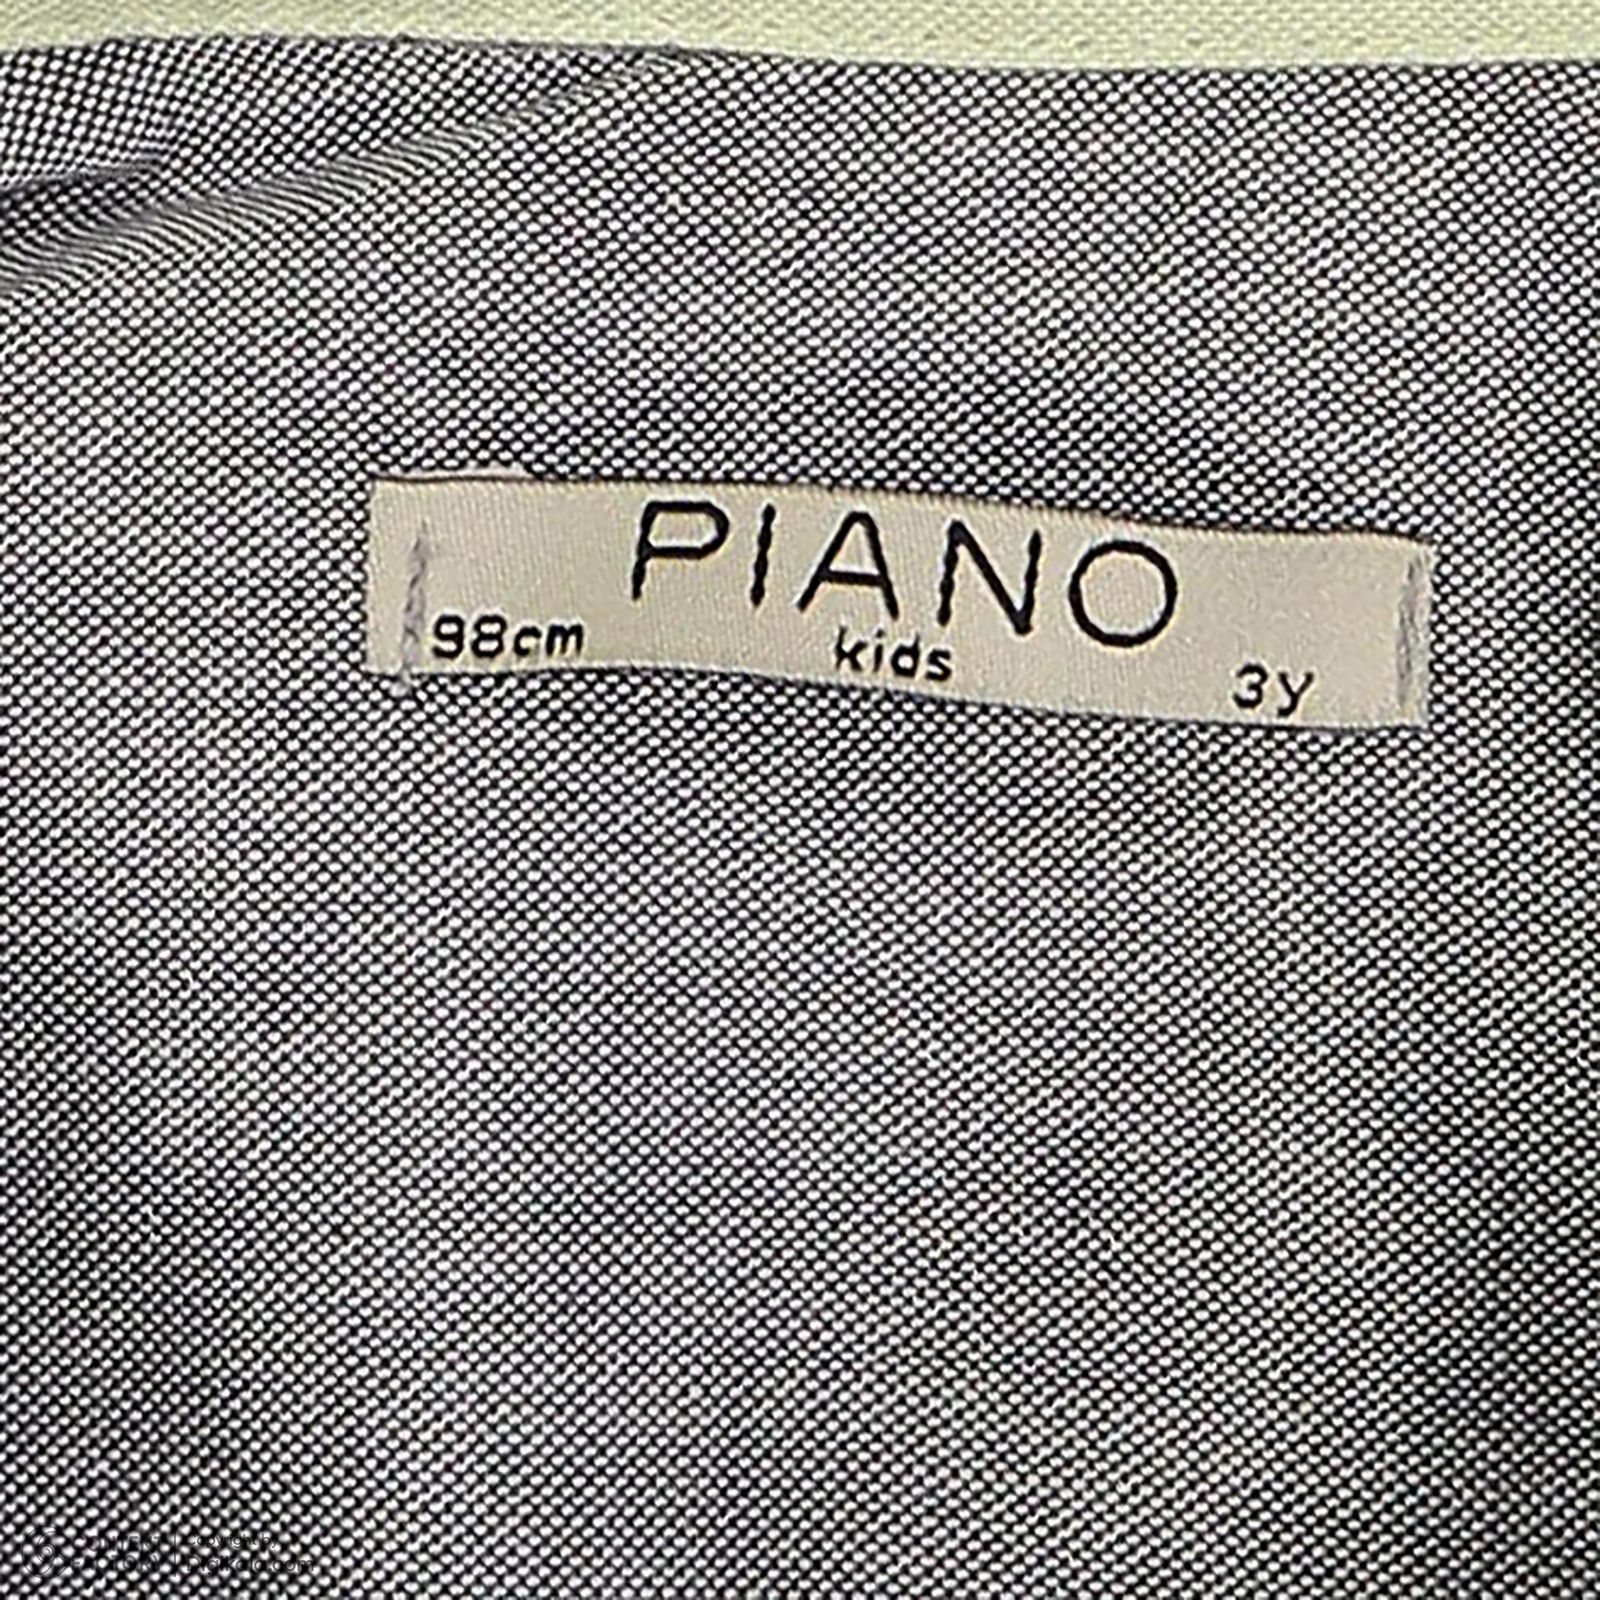 پیراهن نوزادی پسرانه پیانو مدل 8546-1 -  - 2